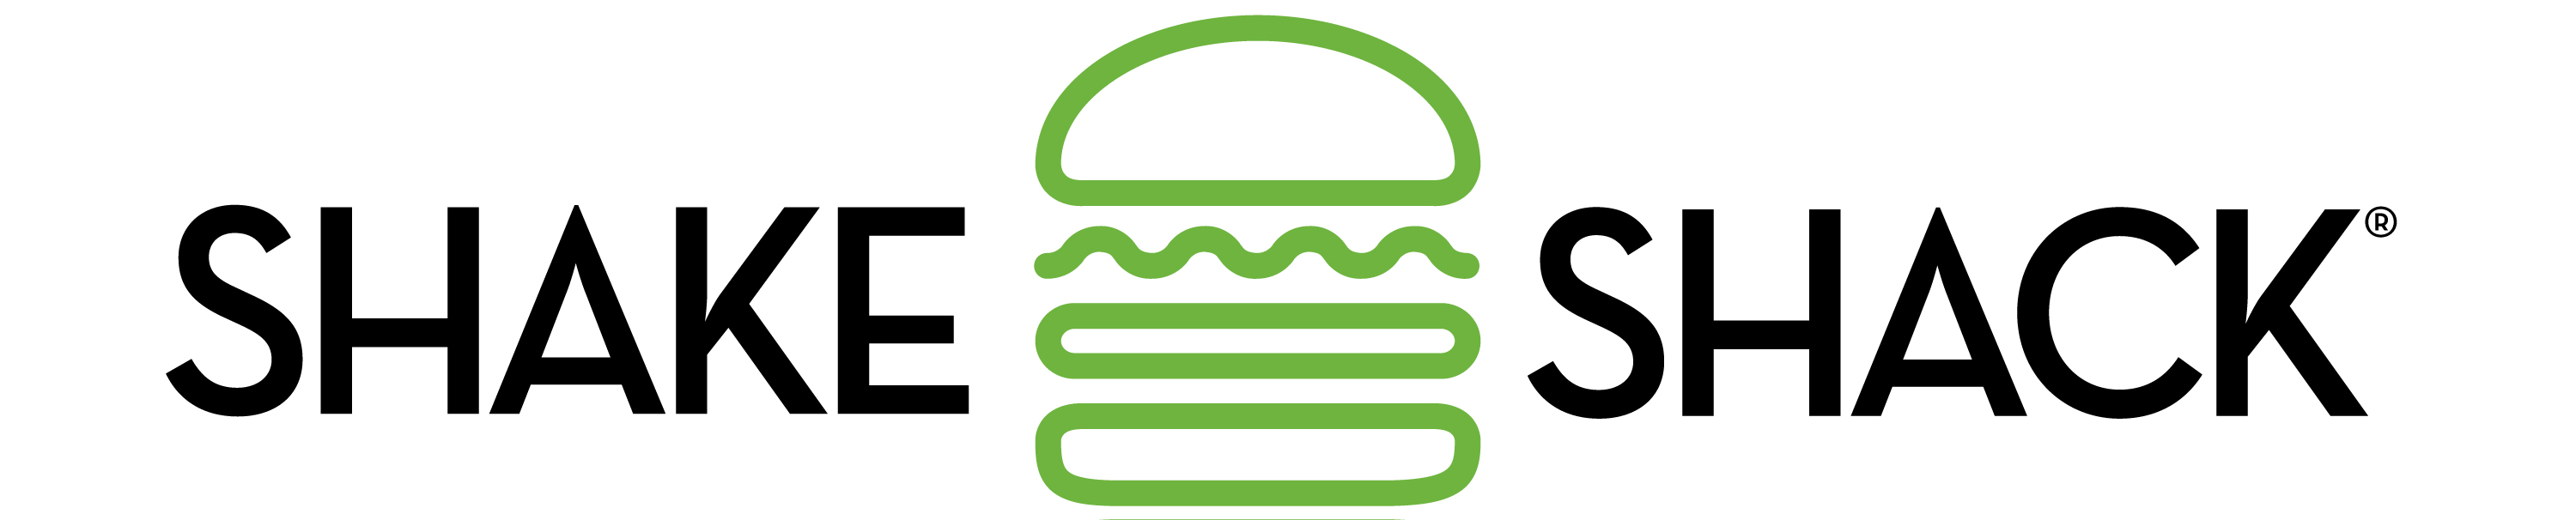 shake shack logo wide